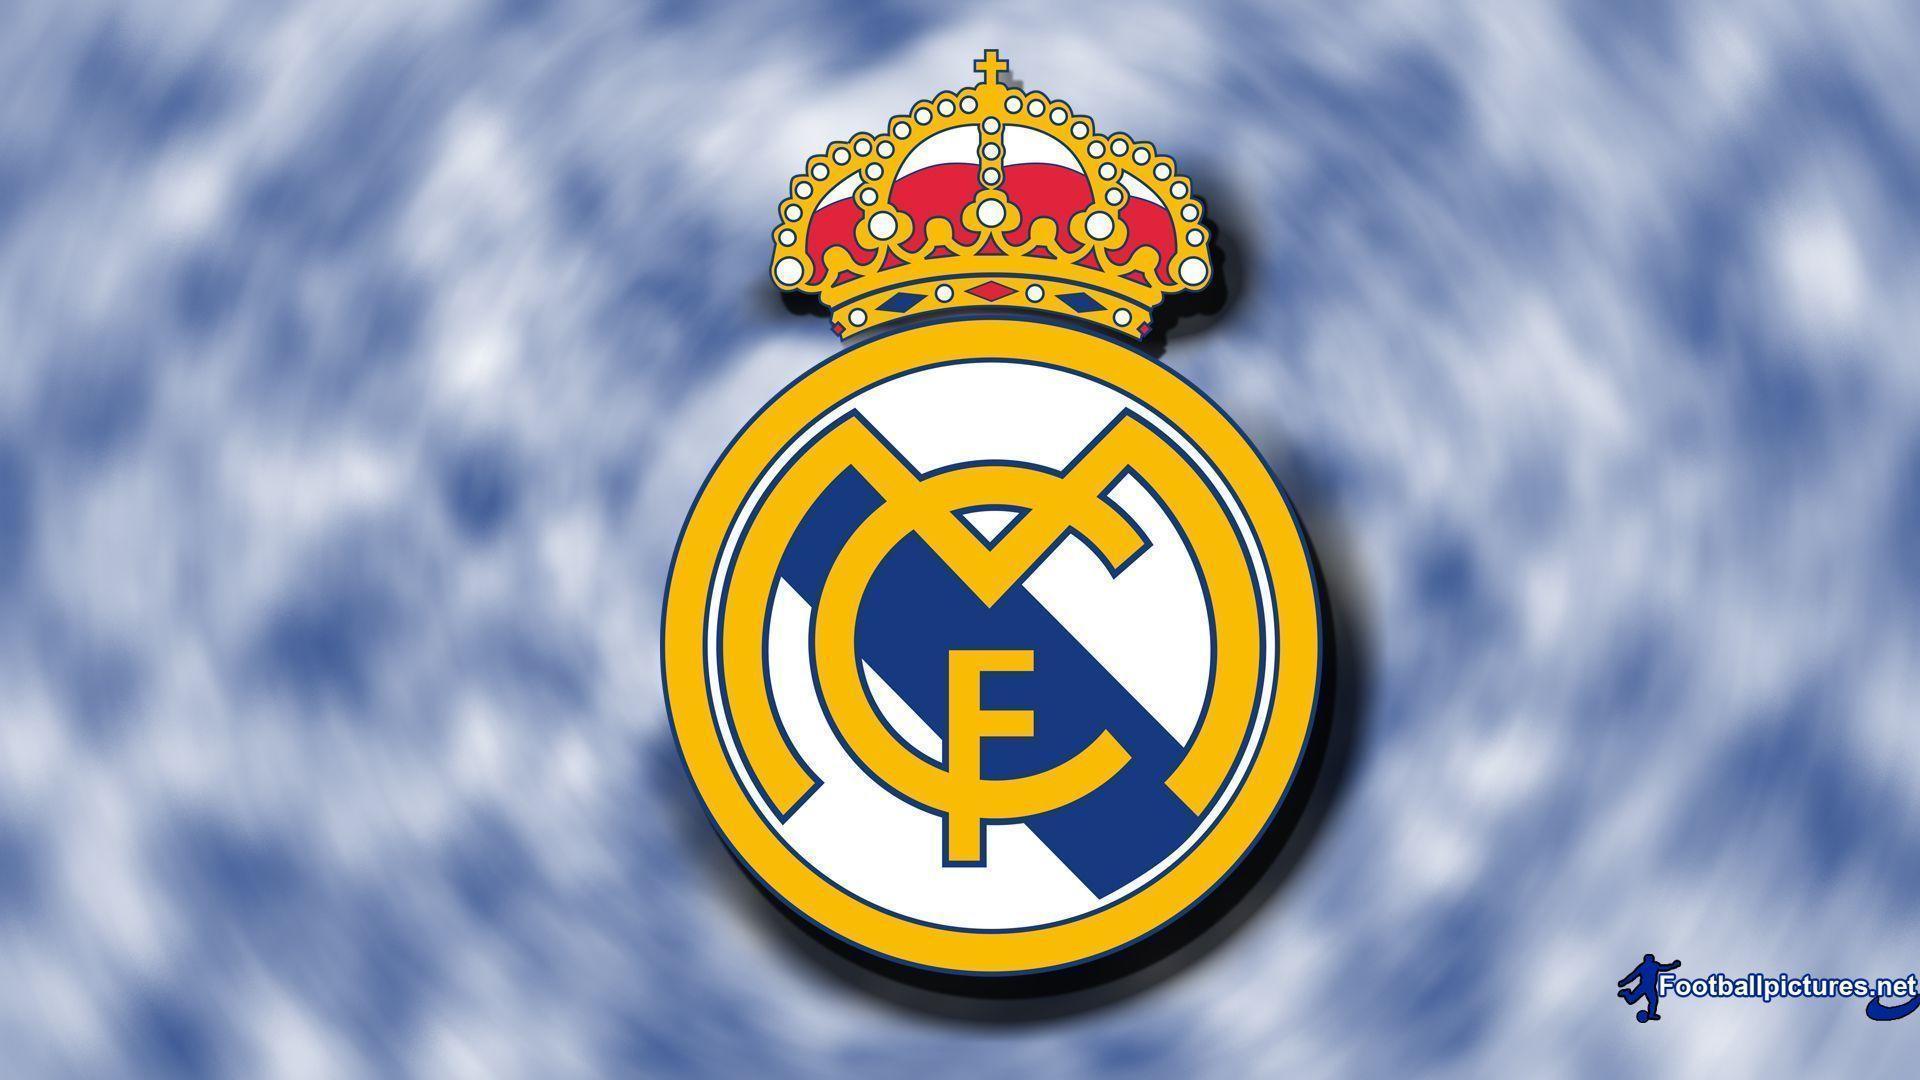 Real Madrid Logo 1080p Wallpaper. Cool Wallpaper